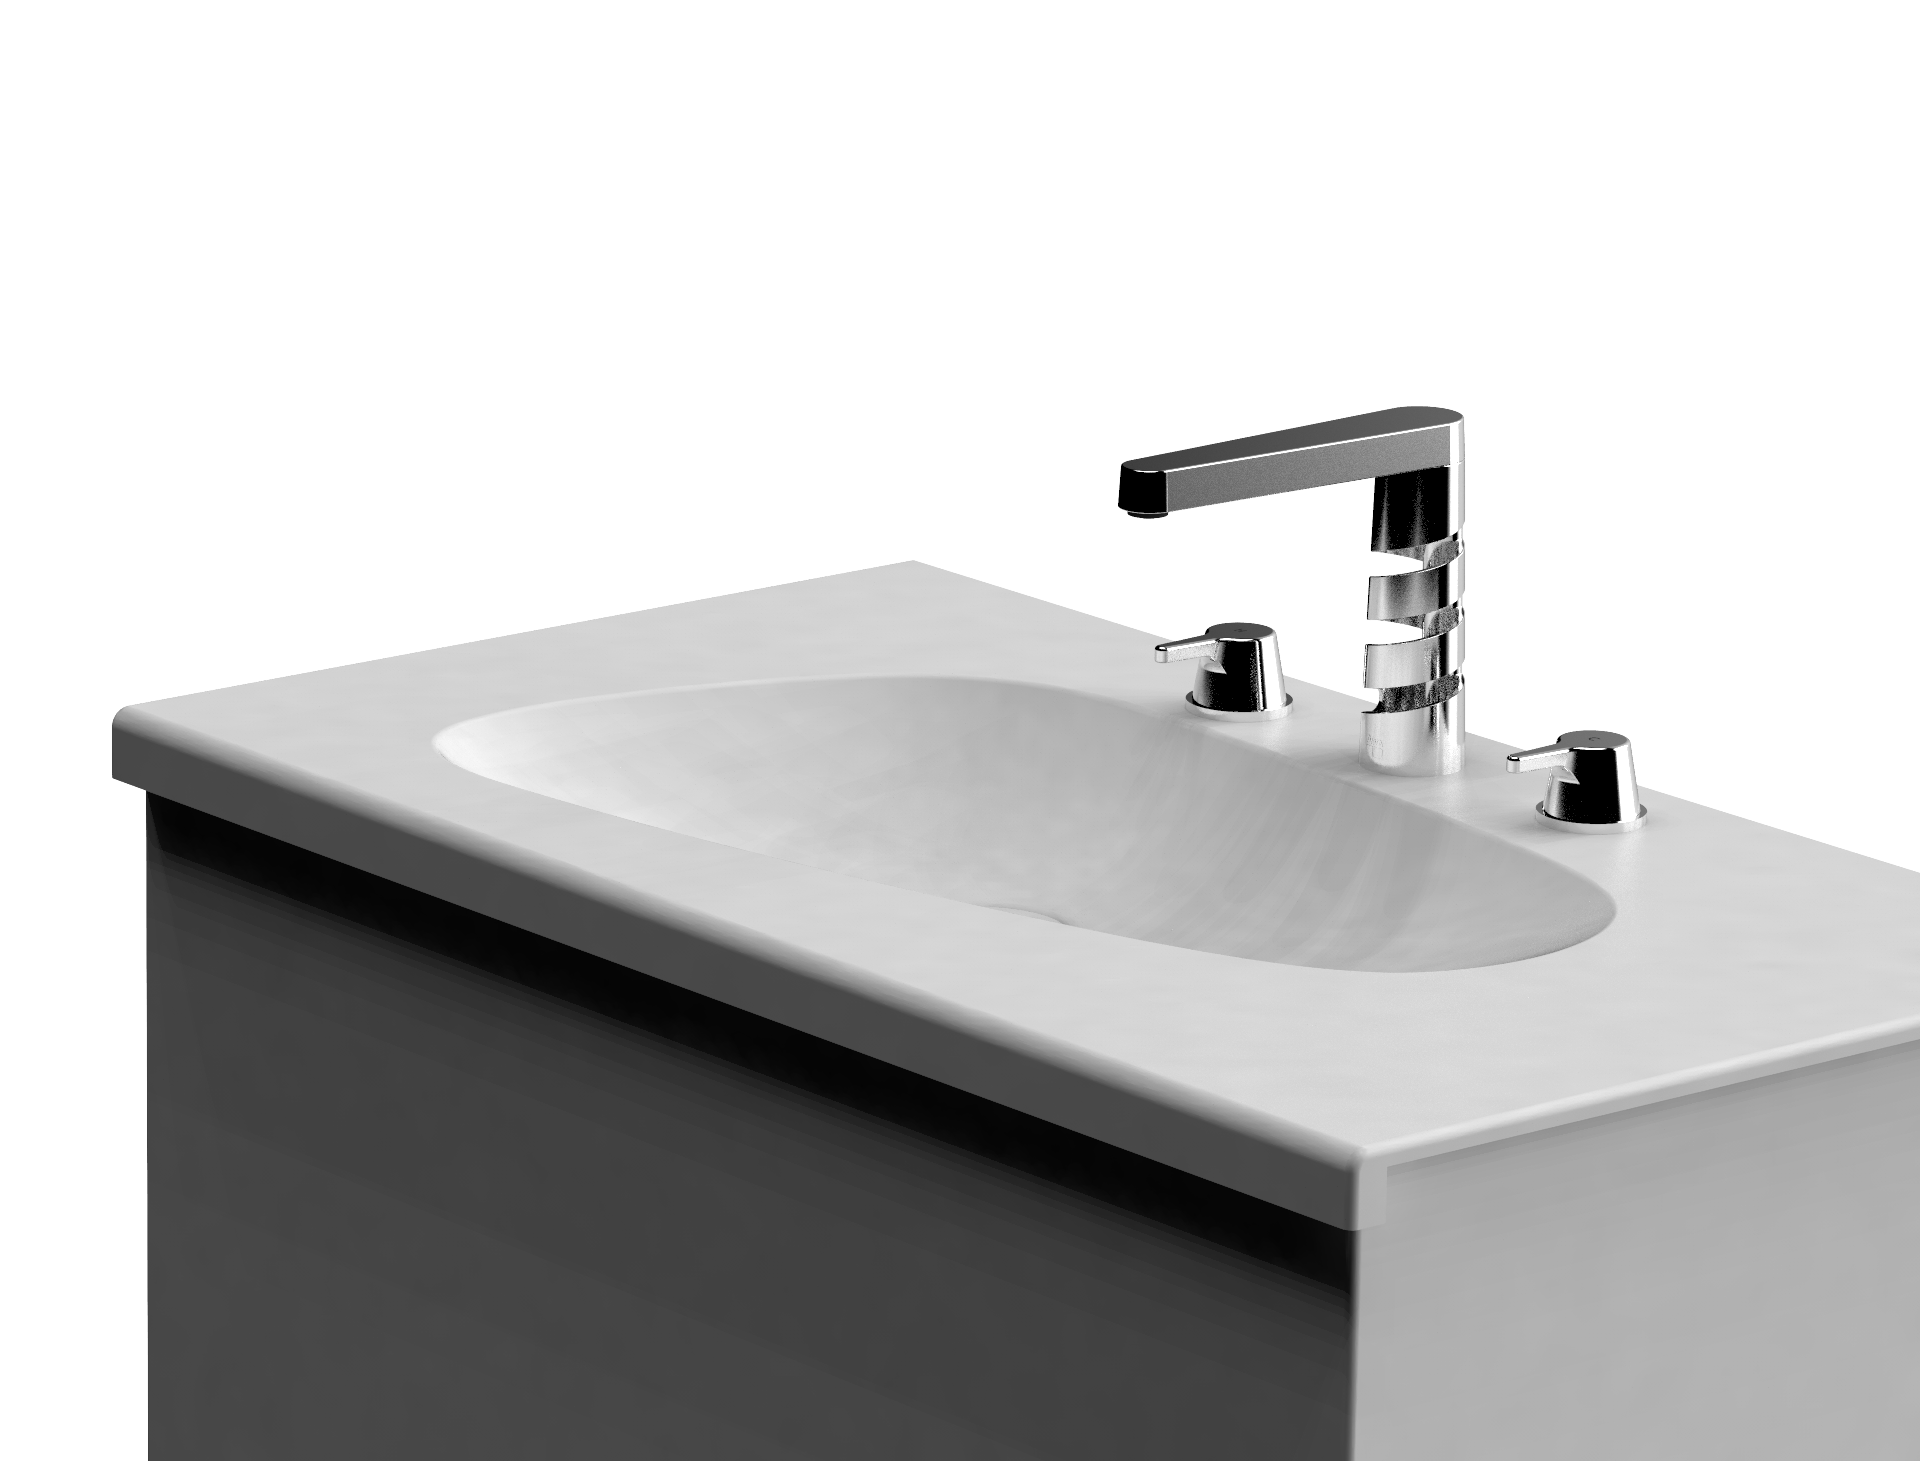 MUSE Design Winners - ZESTY Widespread Bathroom Sink Faucet